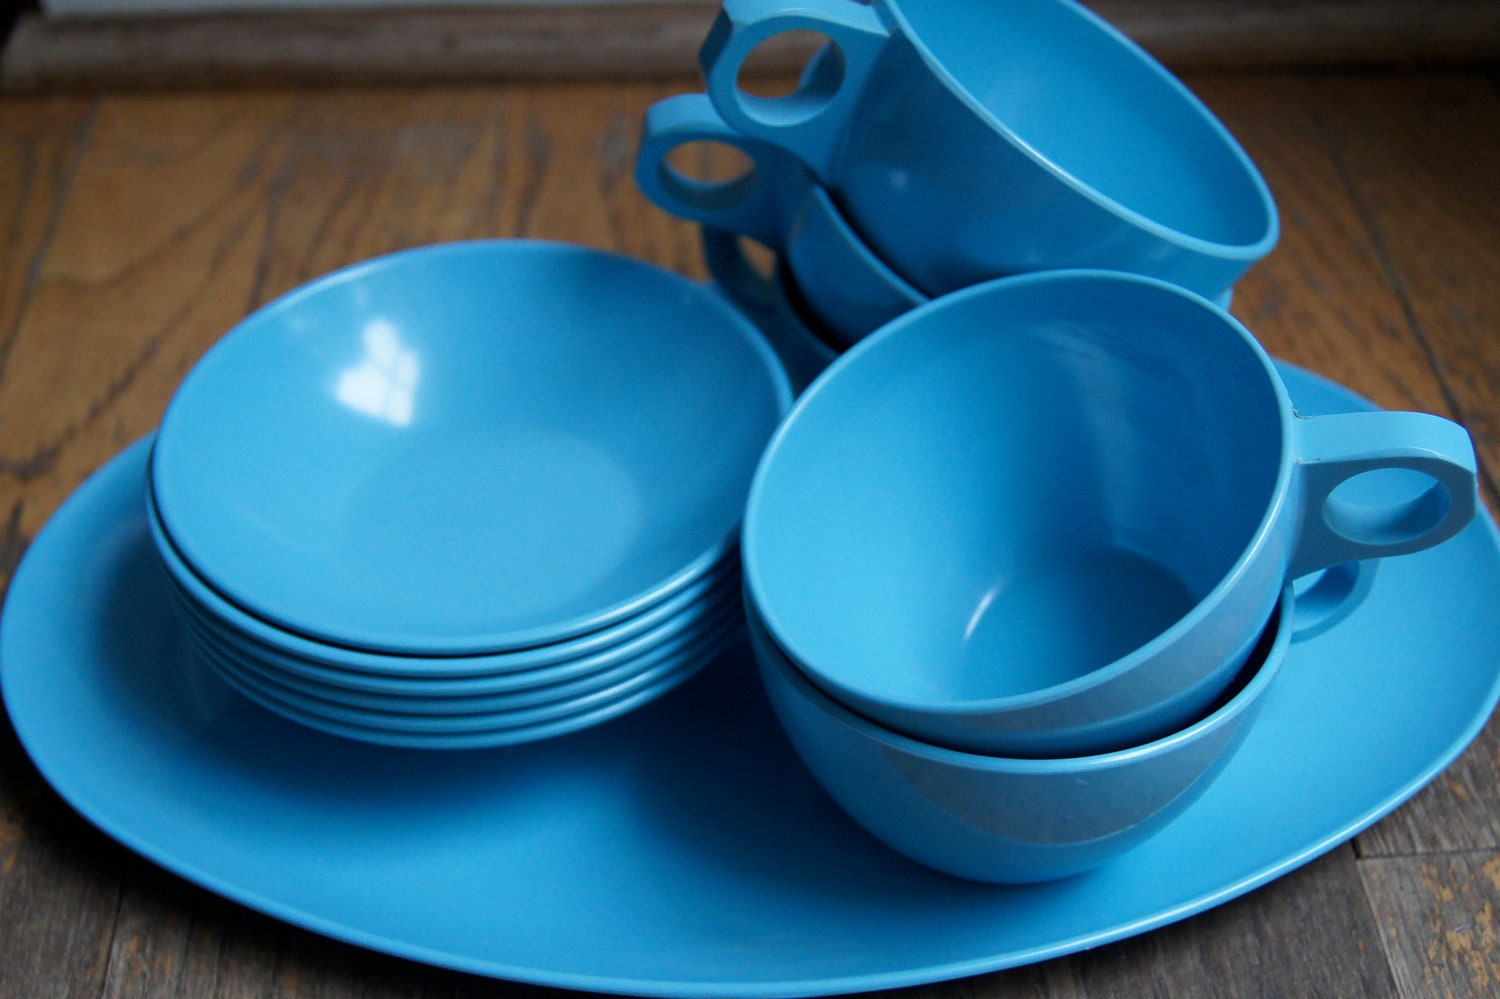 Blue melmac, Blue melamine, Blue Allied Chemical dish set, Glamping dish set